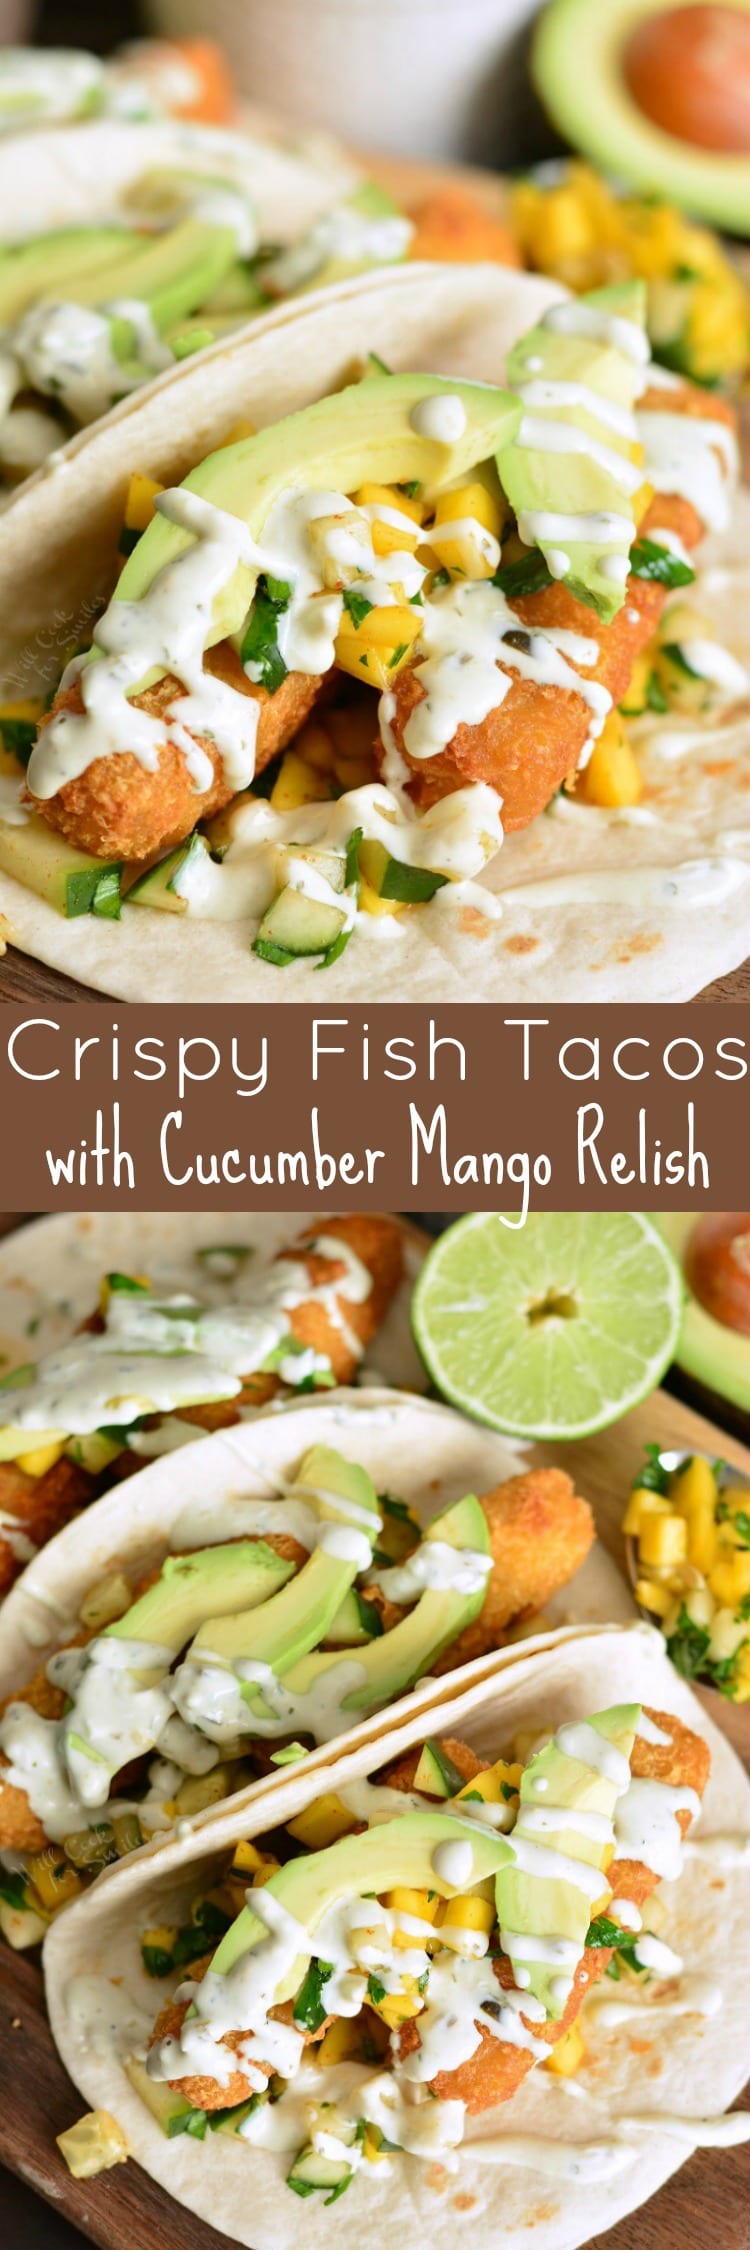 Crispy Fish Tacos with Cucumber Mango Relish collage 